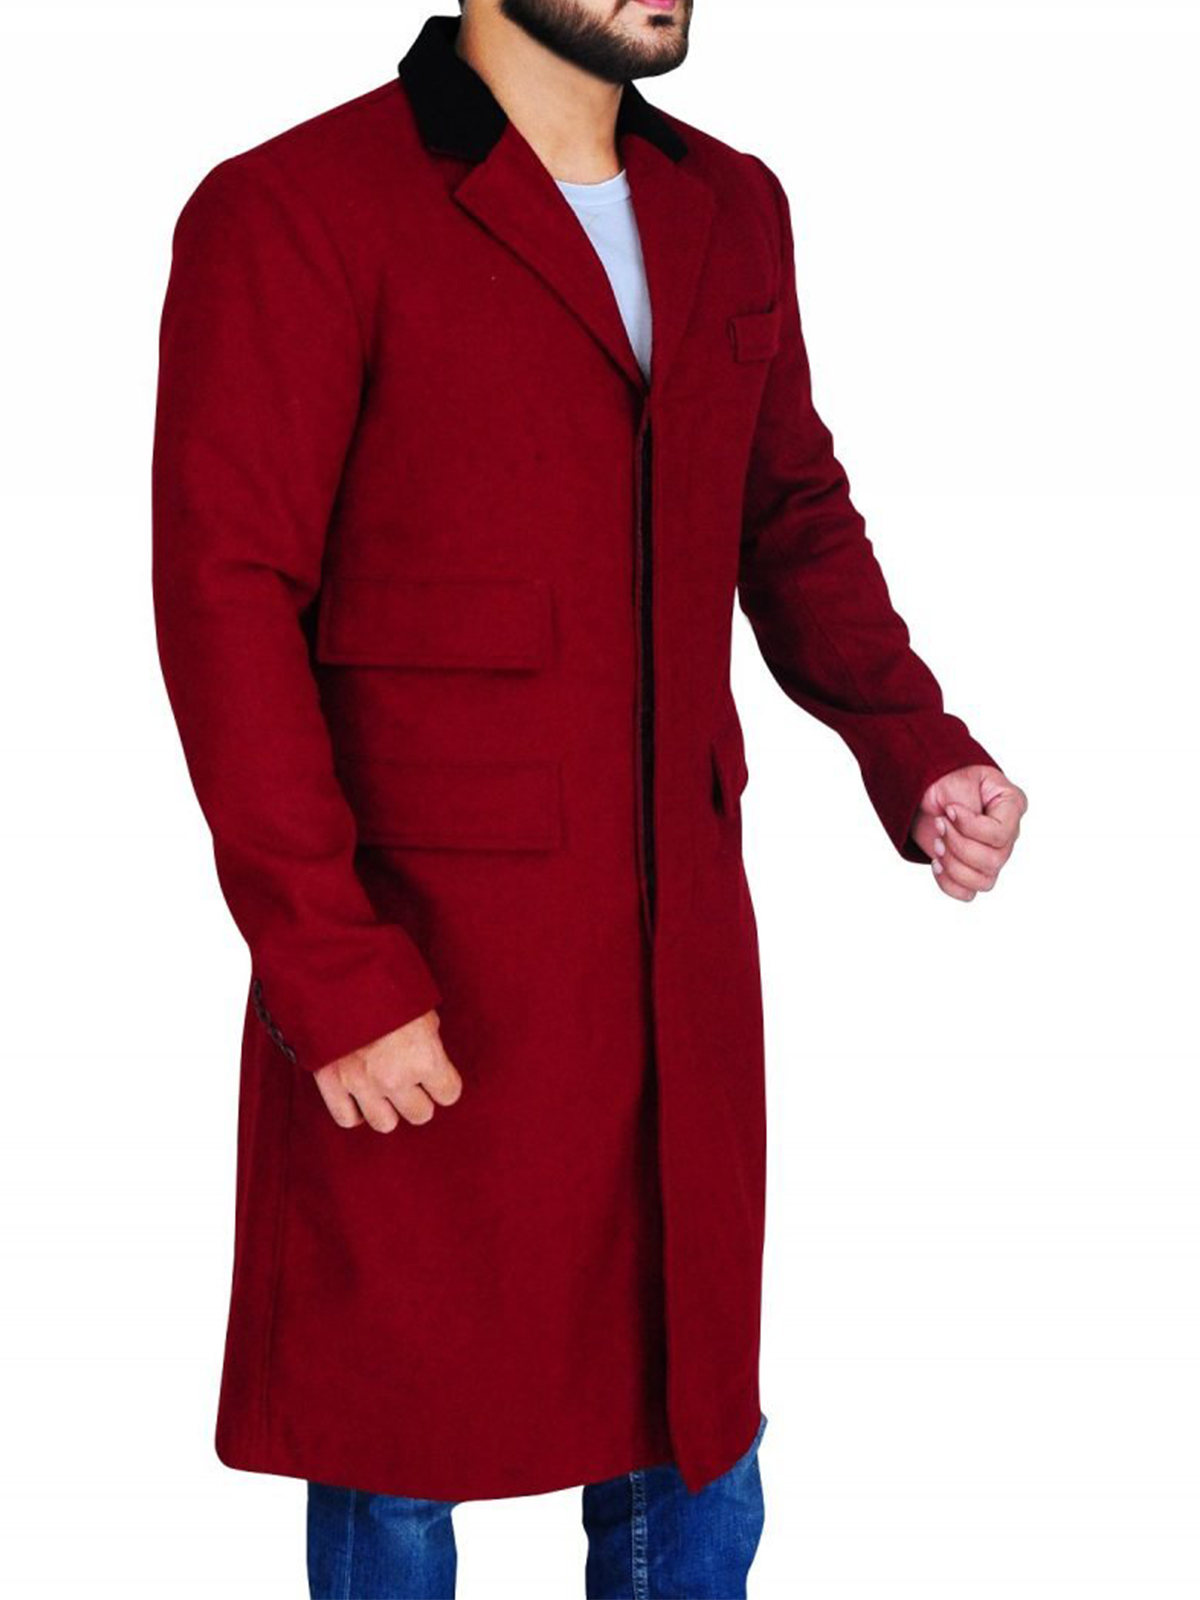 The Greatest Showman Hugh Jackman Coat